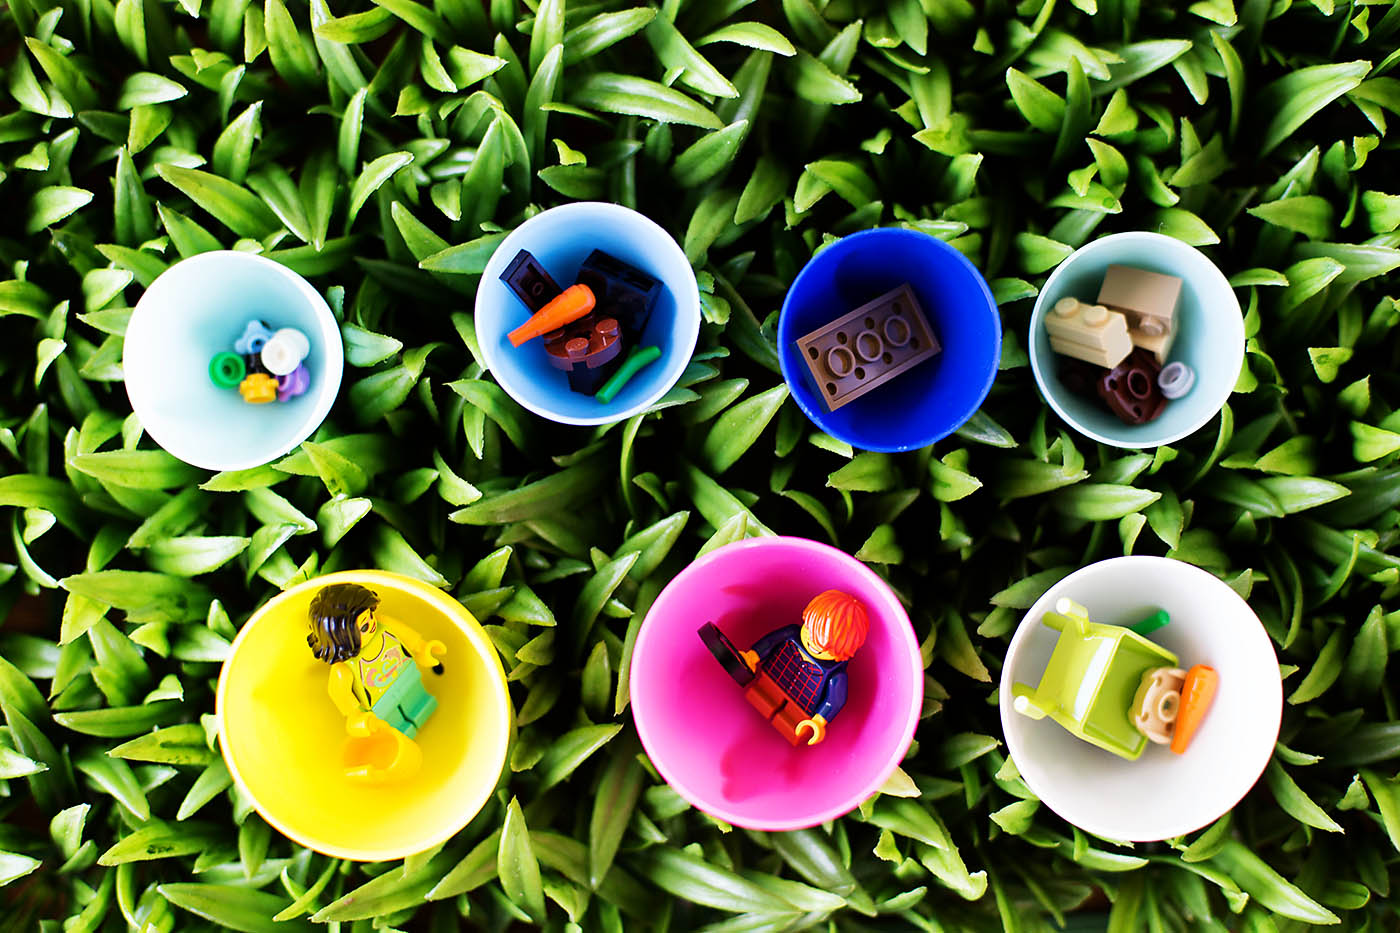 LEGO Easter Egg hunt idea